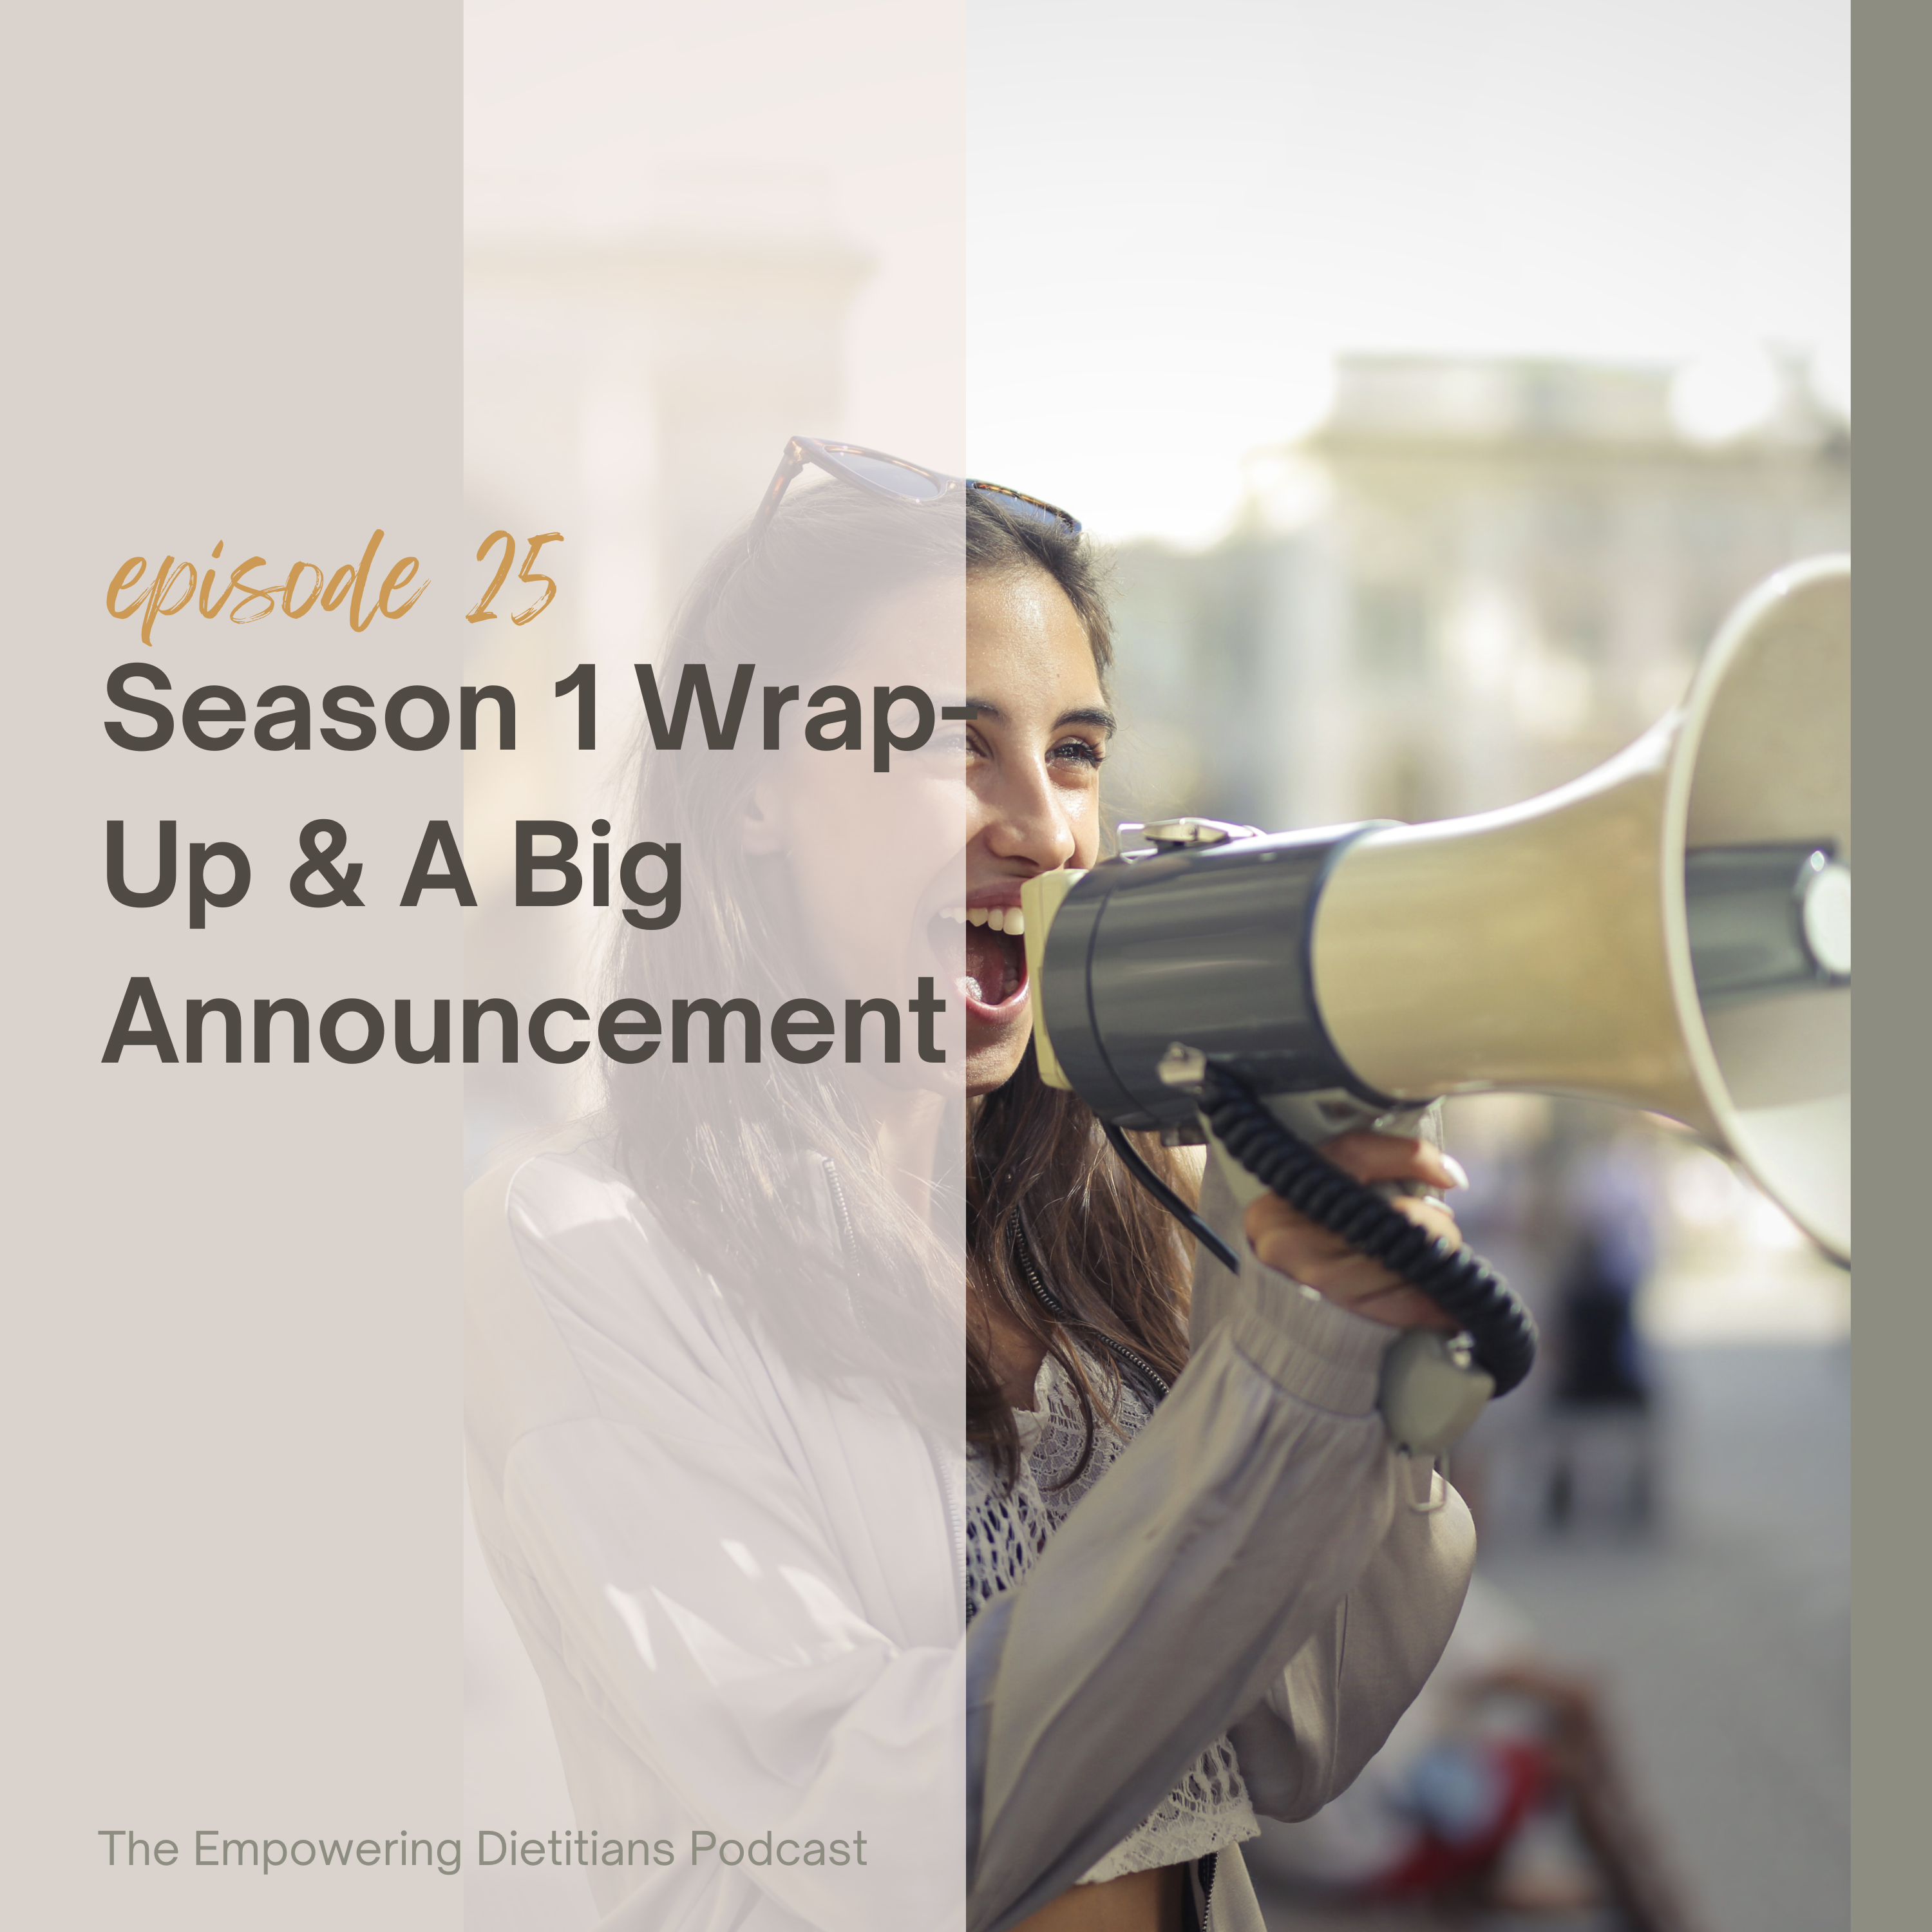 season 1 wrap-up & a big announcement